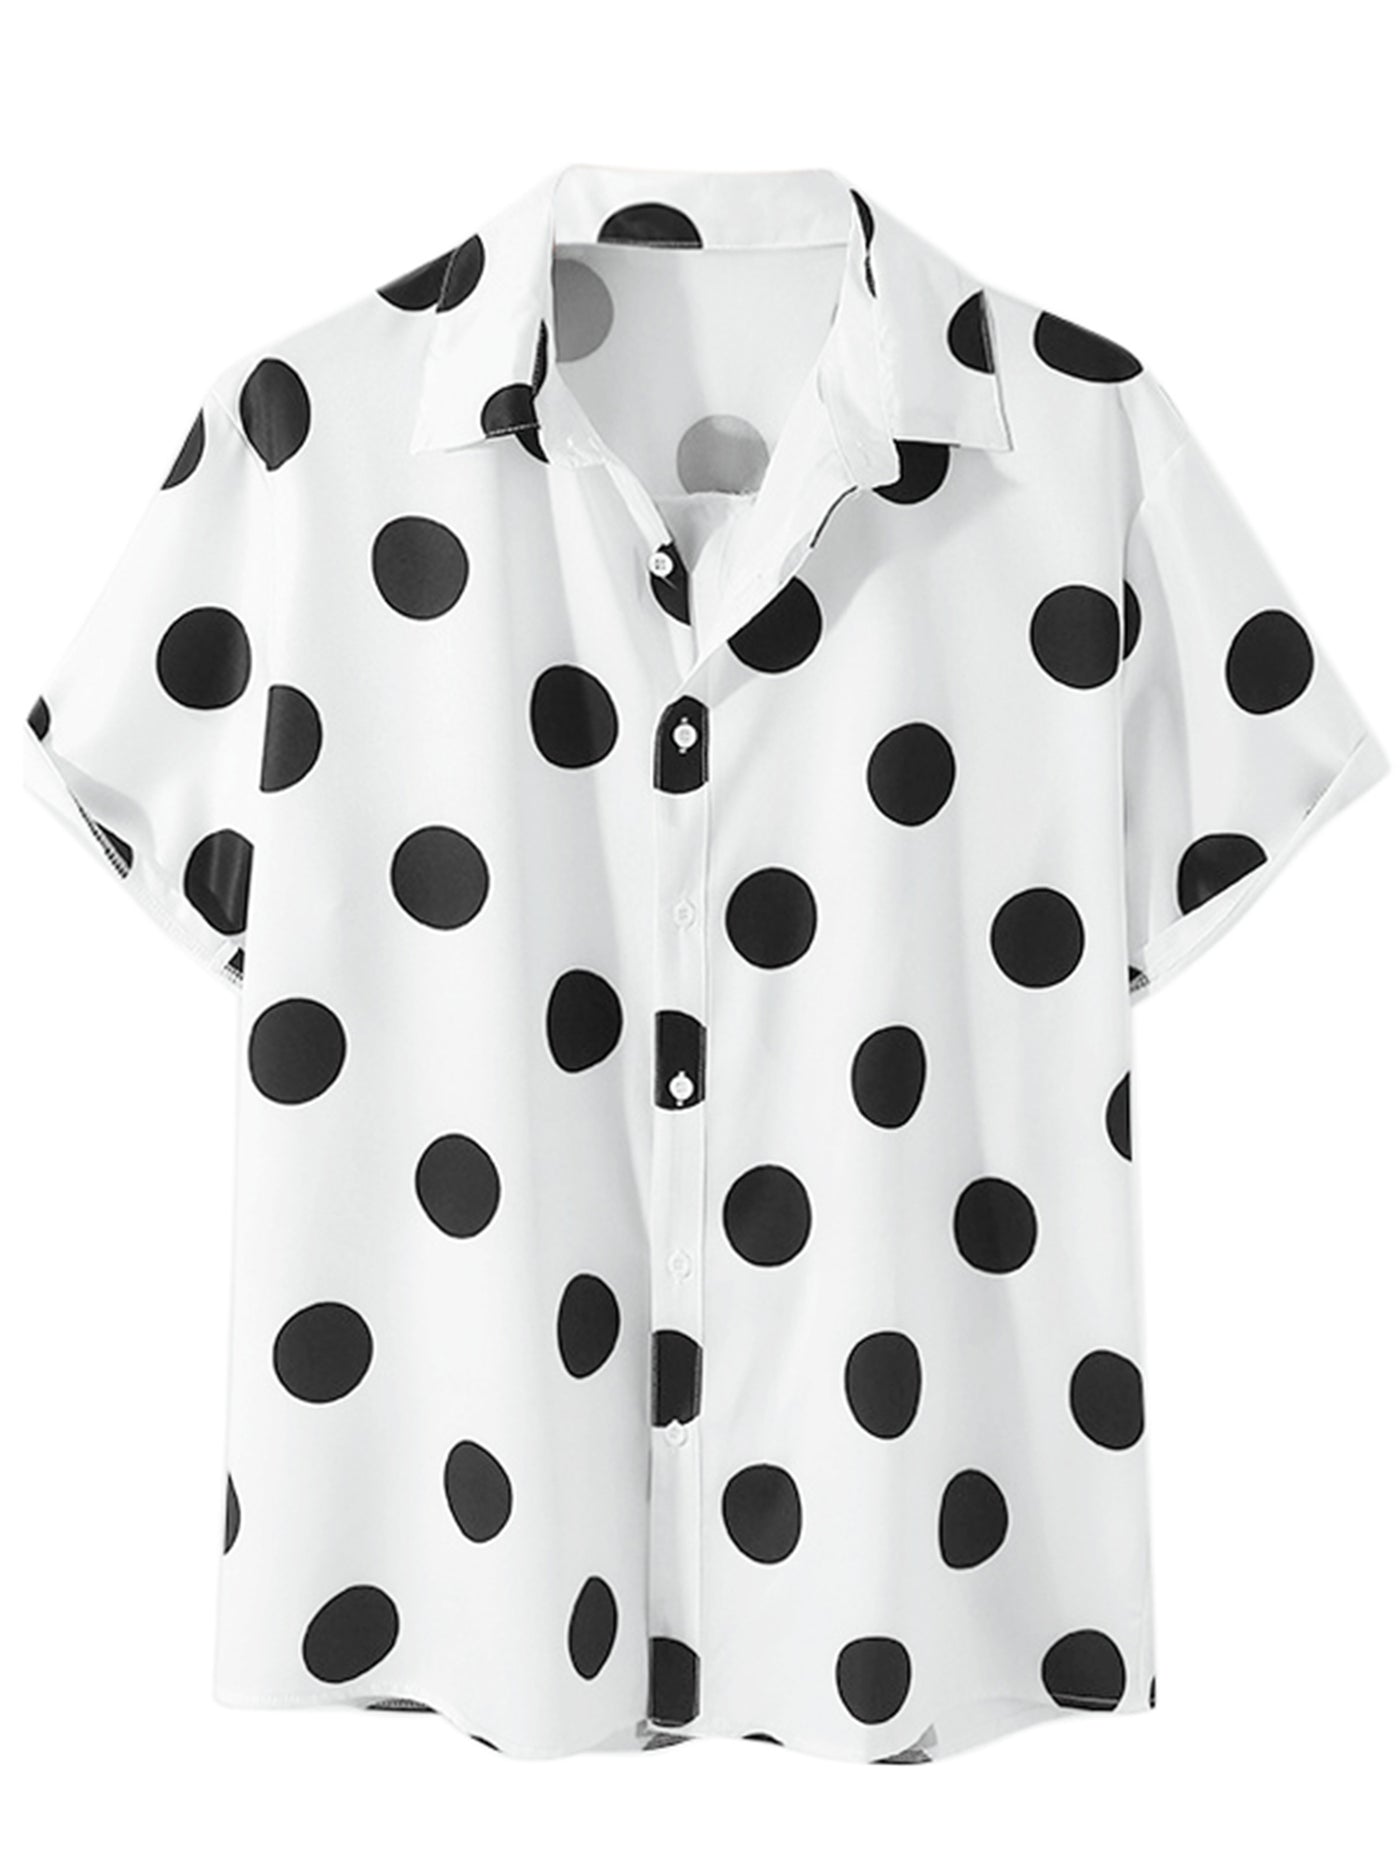 Bublédon Beach Polka Dots Printed Shirt for Men's Button Down Short Sleeves Casual Shirts